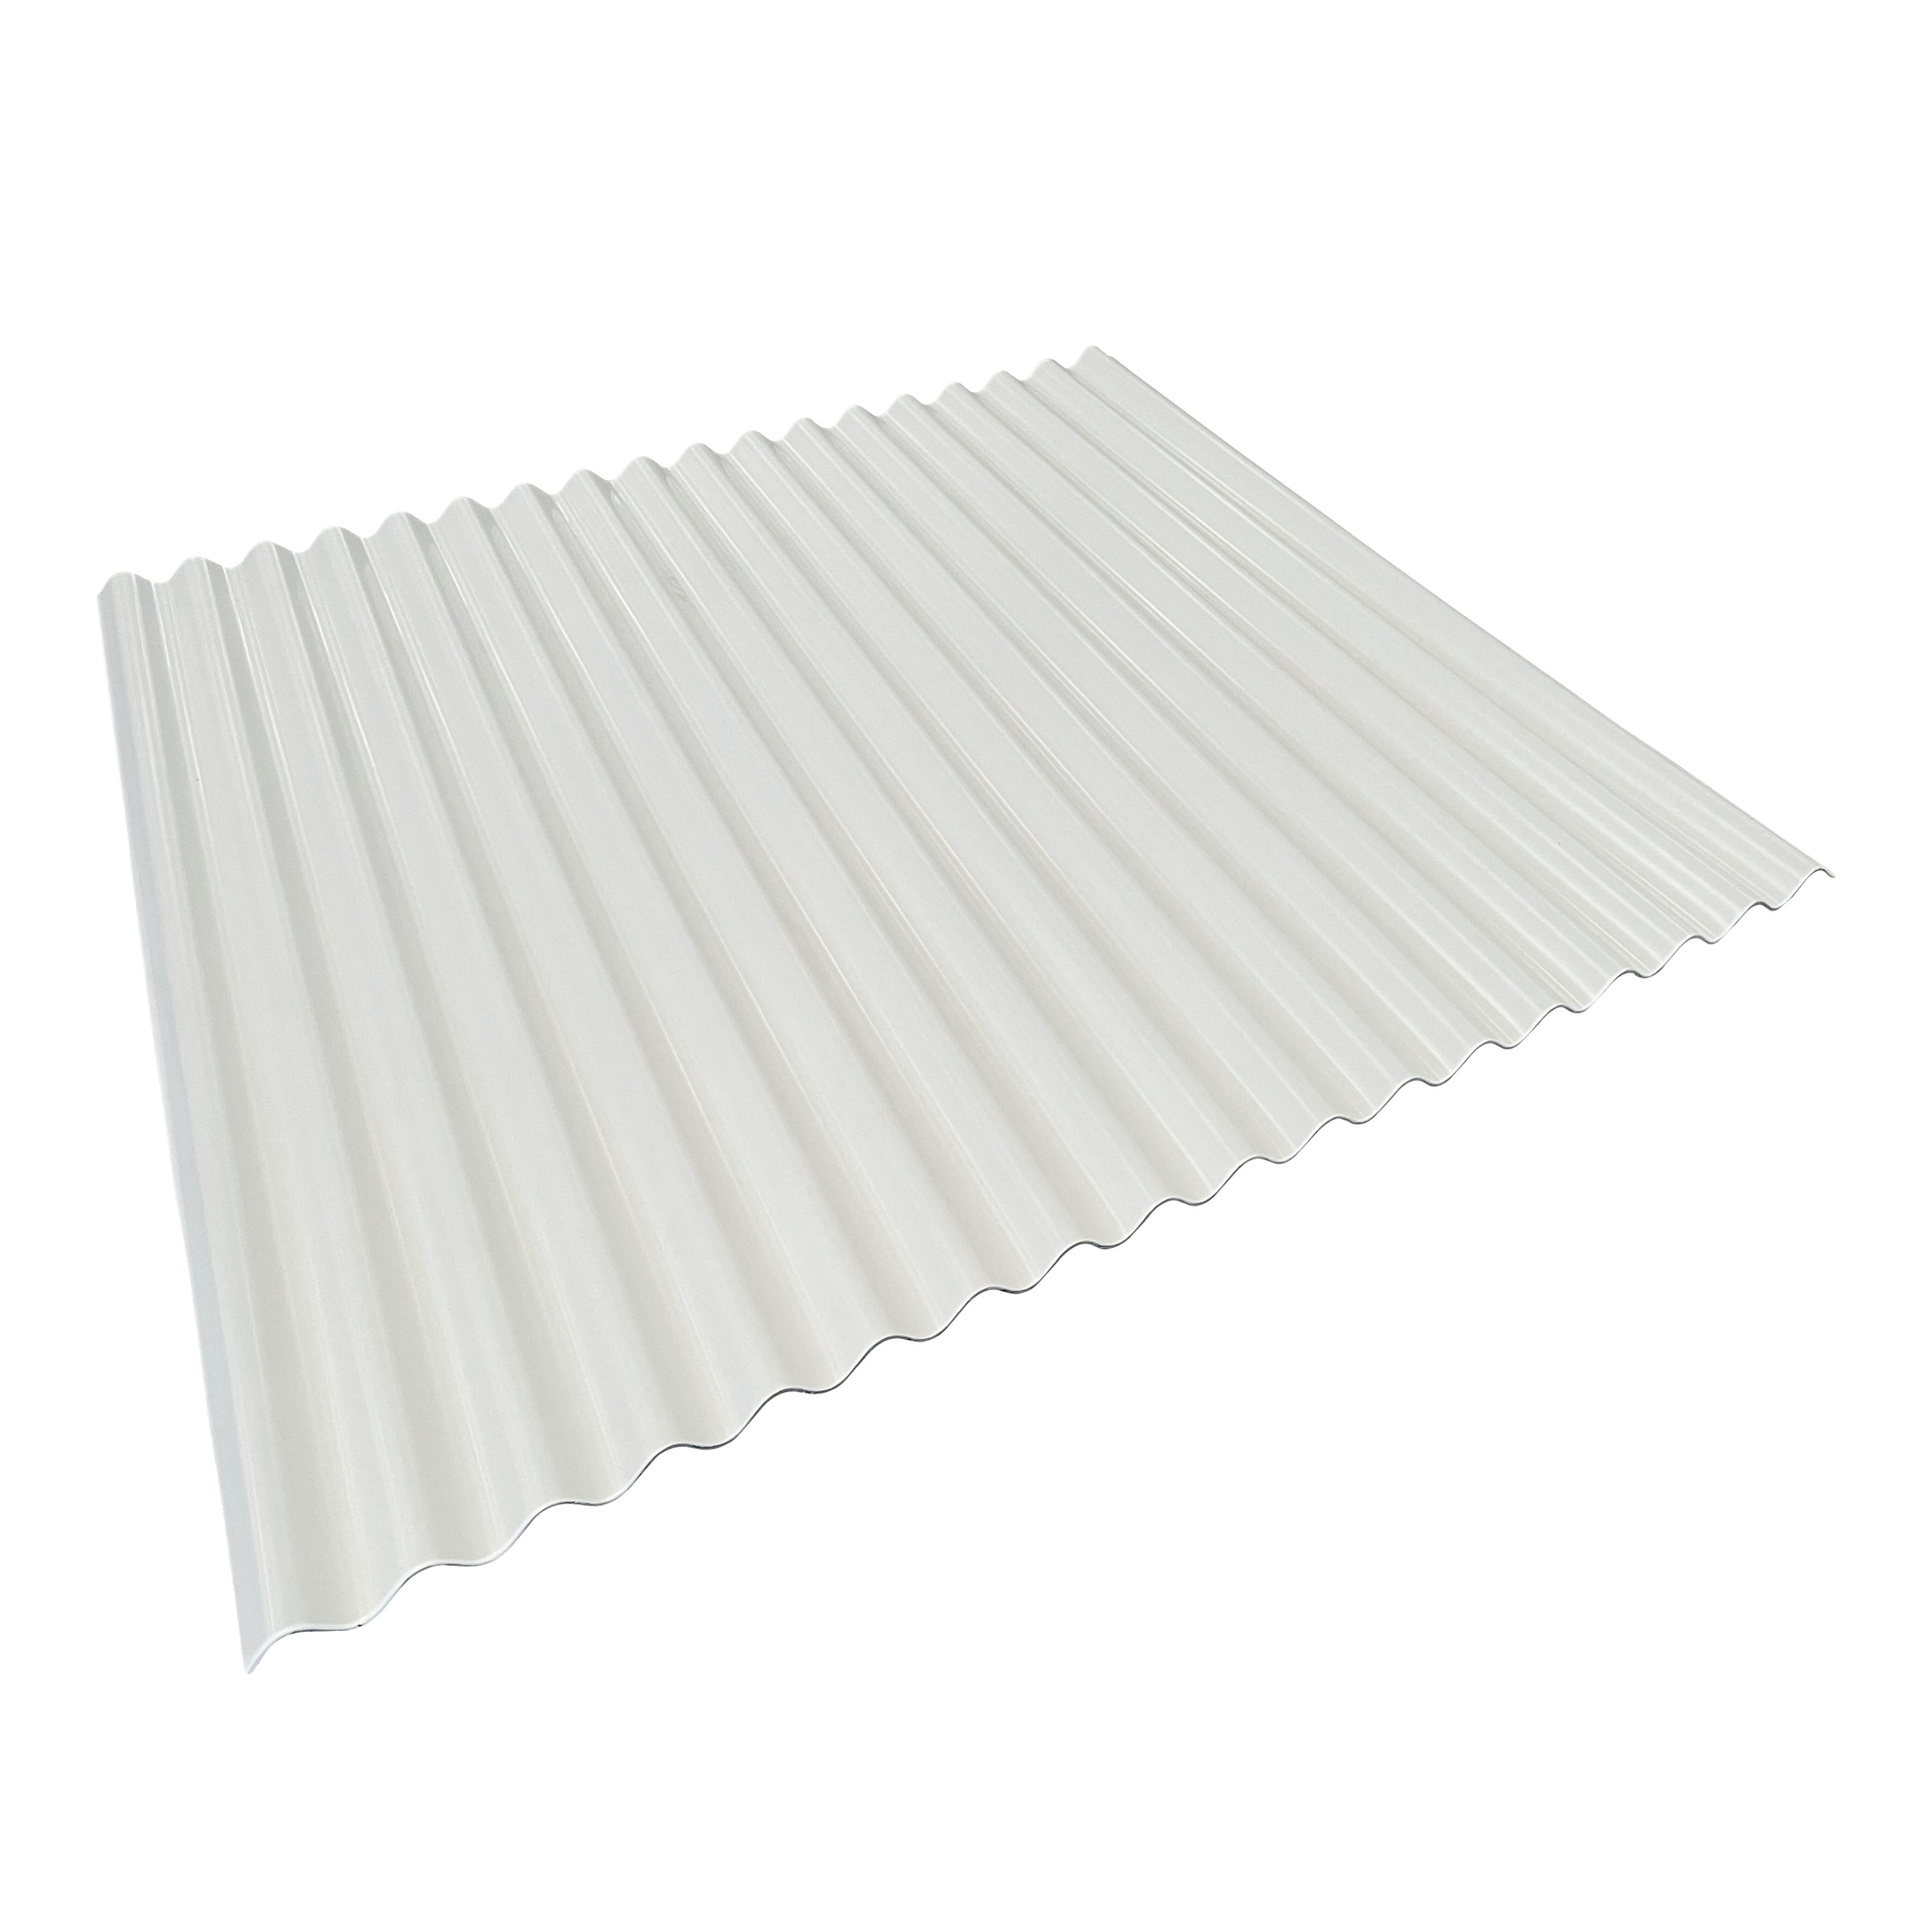 PVC Corrugated Roof Sheet tile C1130